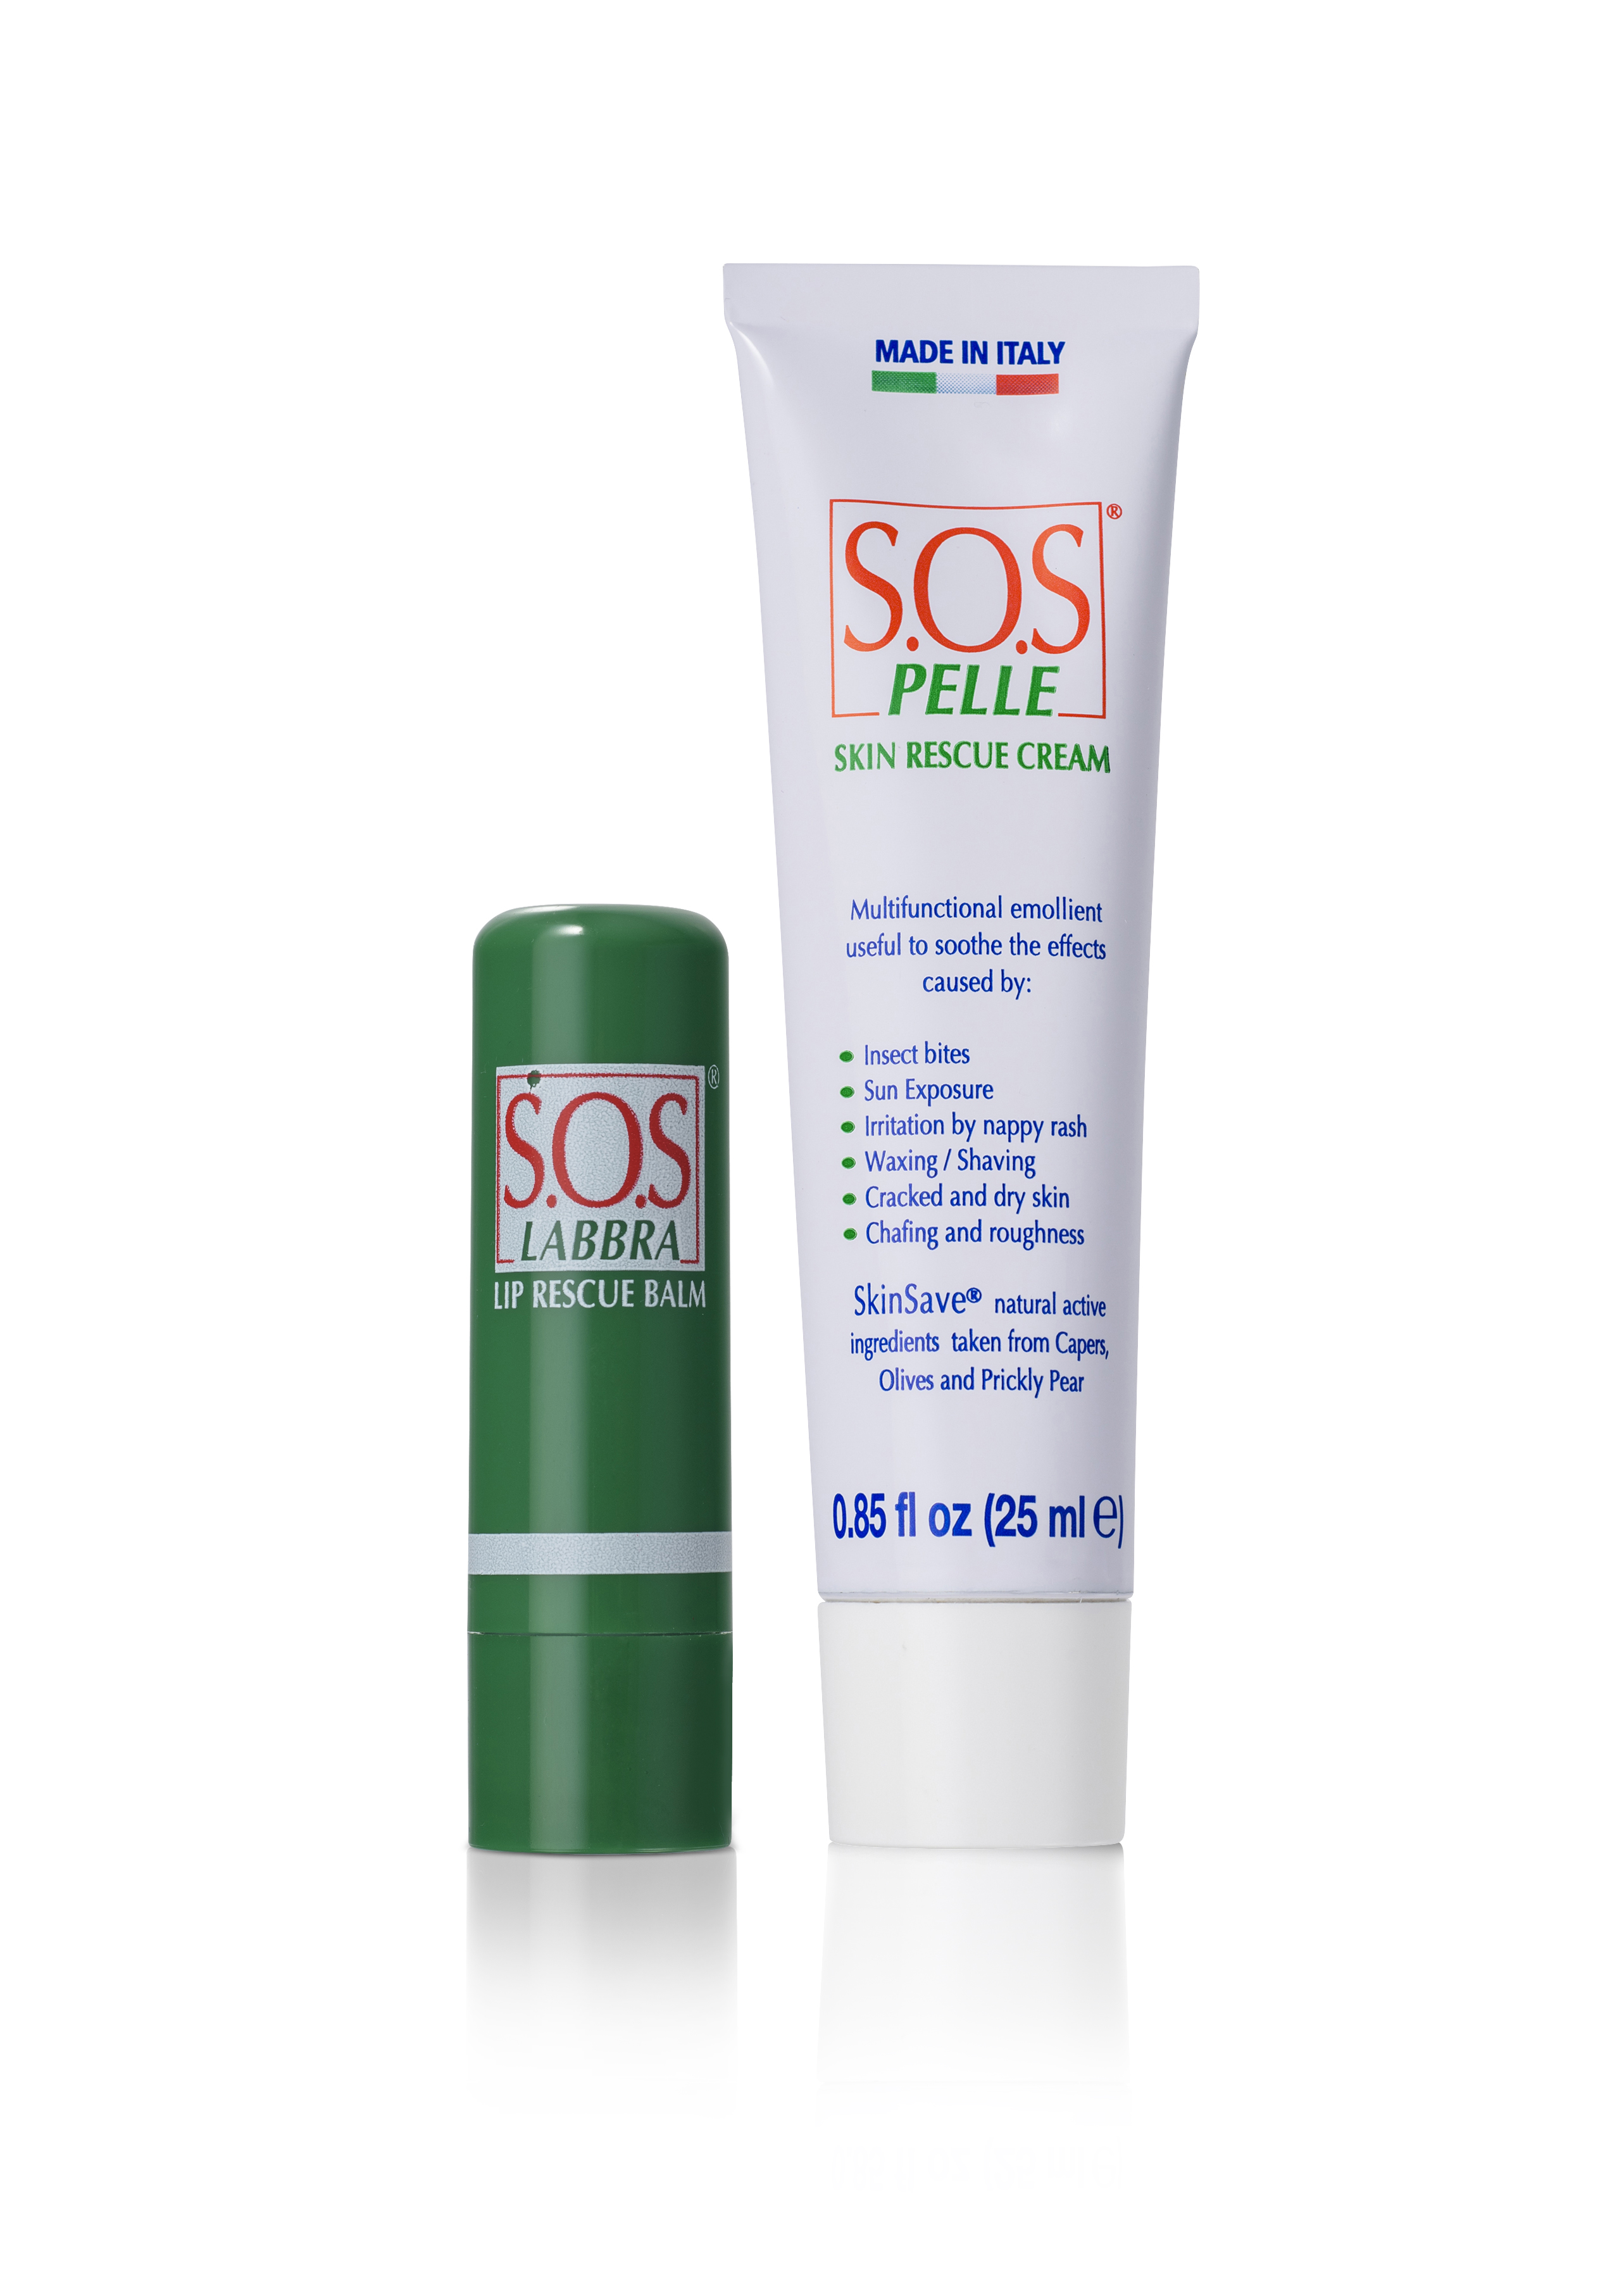 SOS skin rescue group